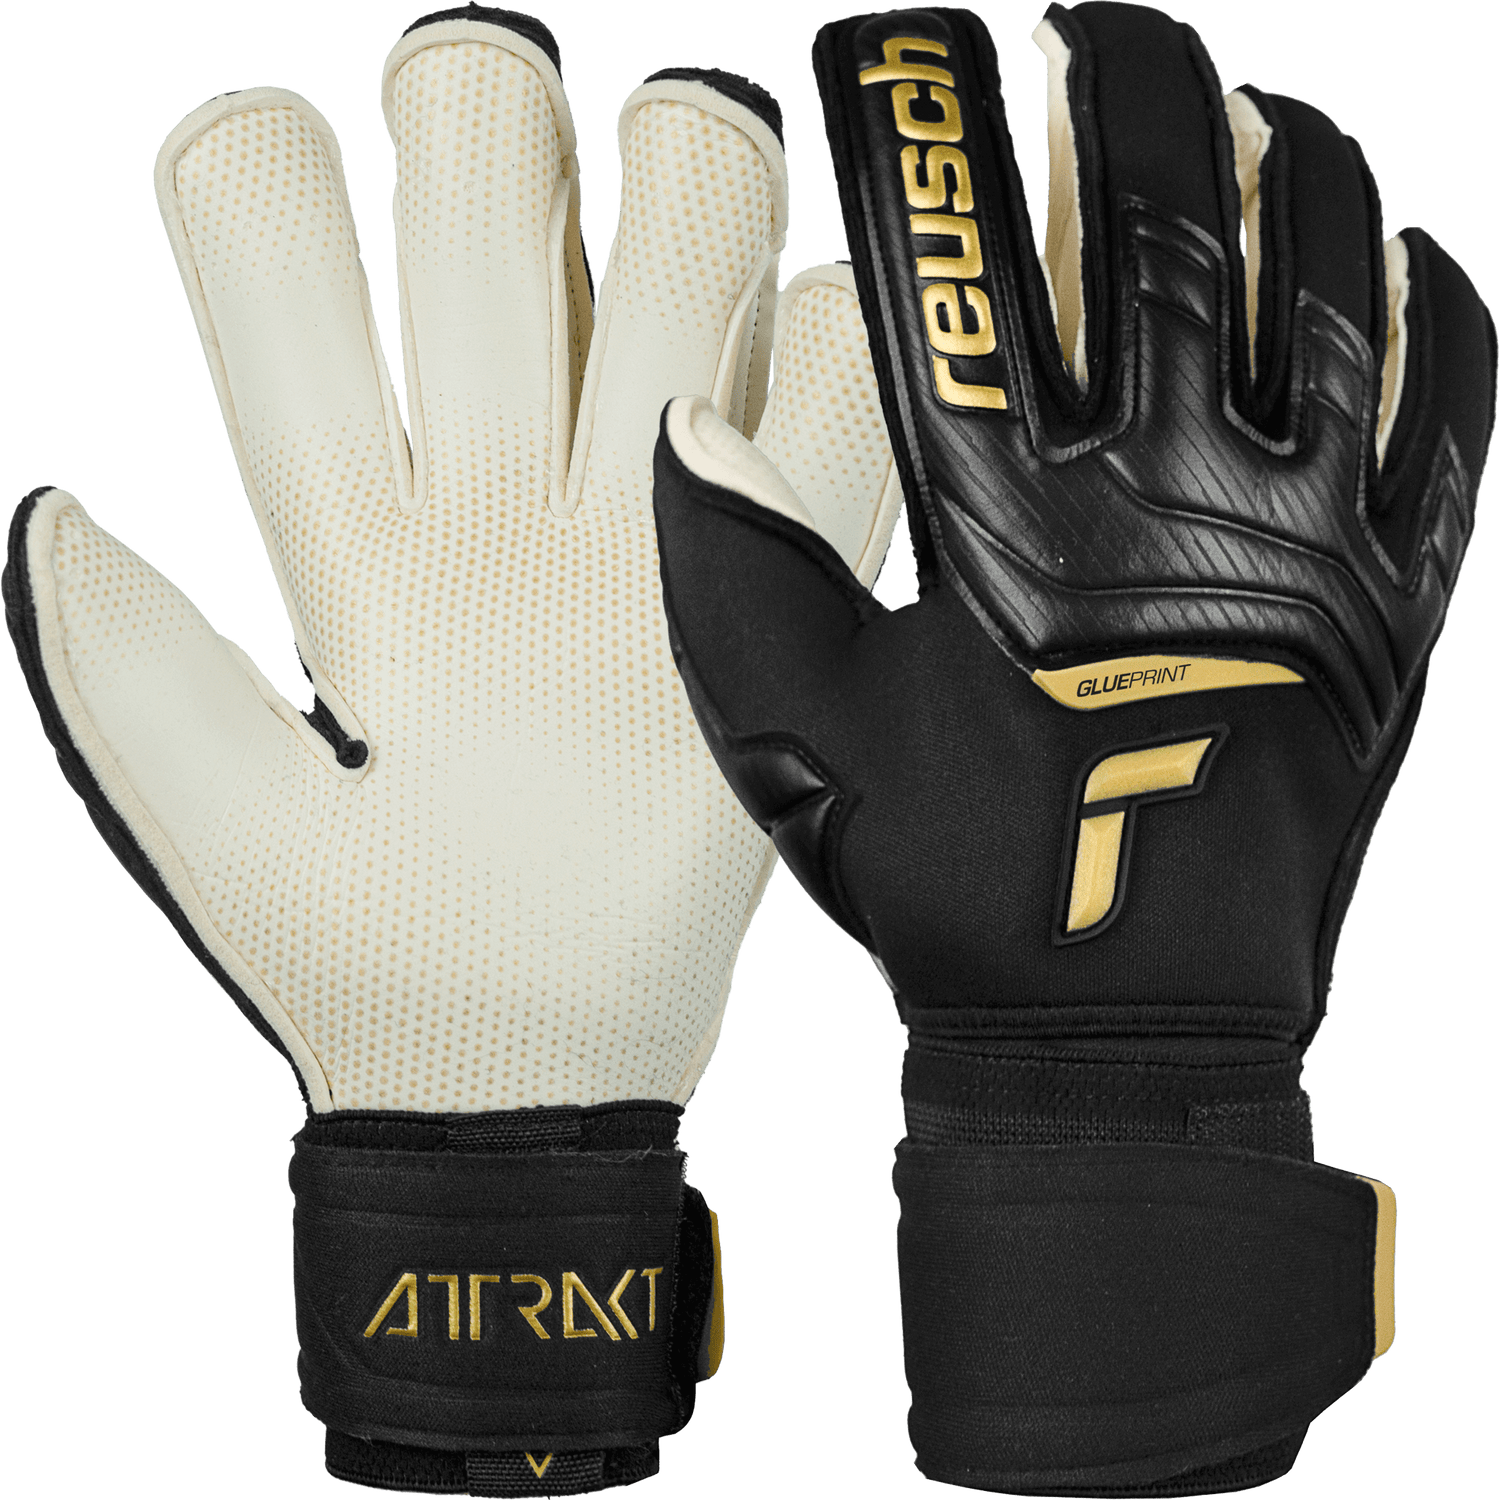 Reusch Attrakt Gold X Glueprint Ortho-Tec Goalkeeper Gloves - Black-Gold (Pair)